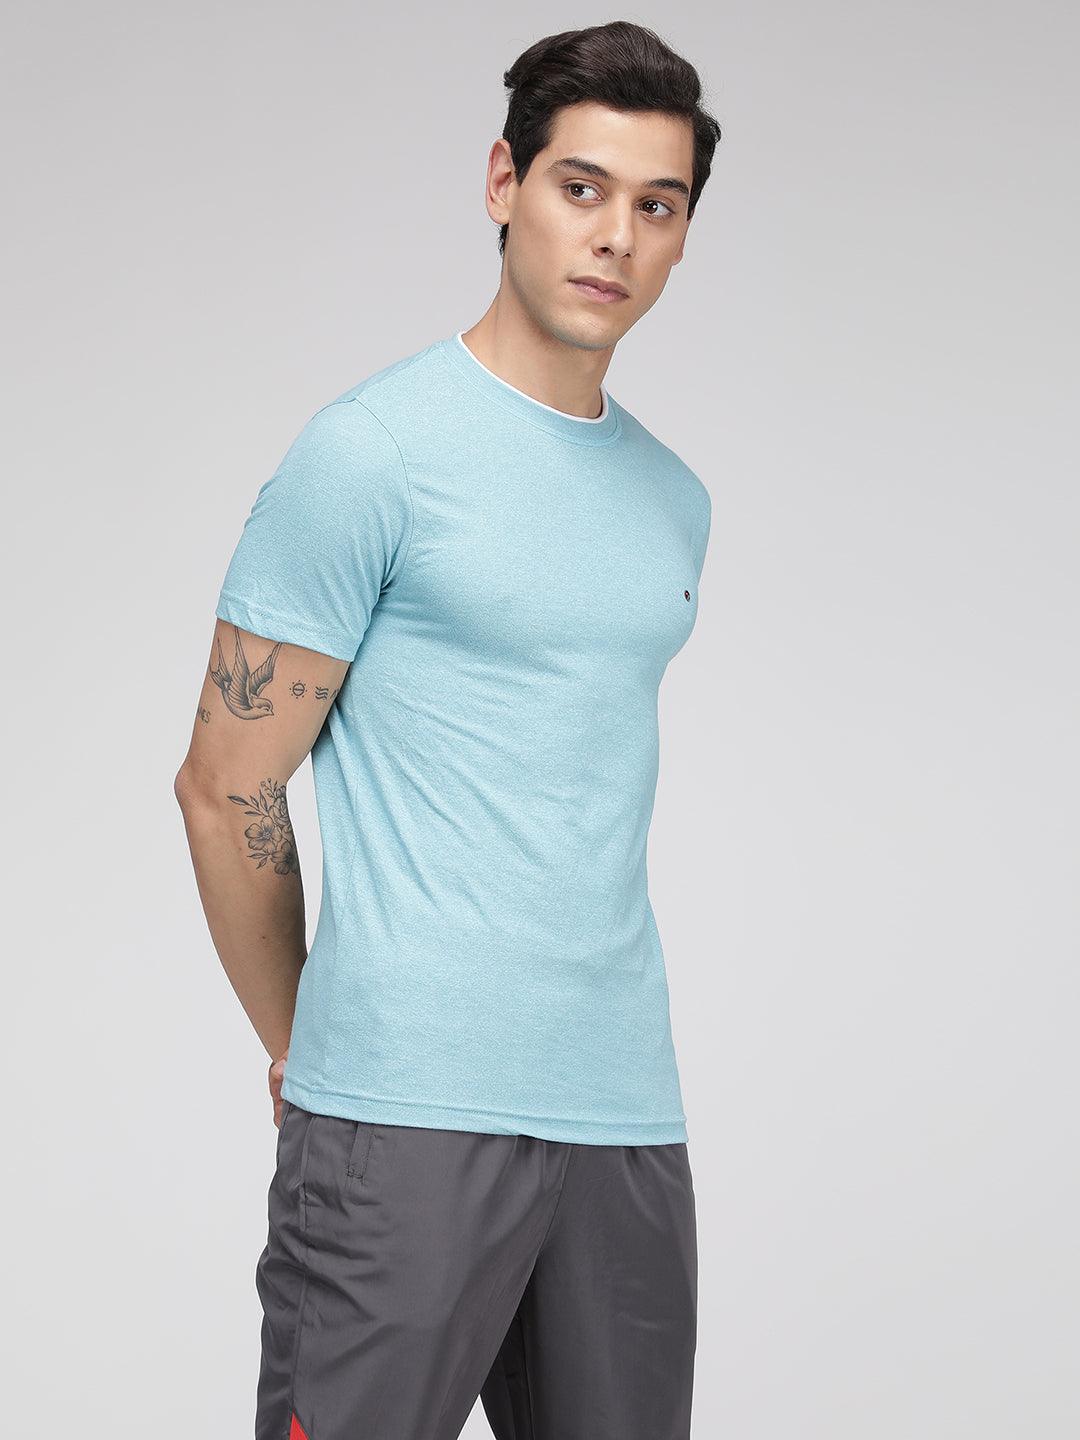 Sporto Men's Cotton Rich Regular T-Shirt - Sky Blue Melange